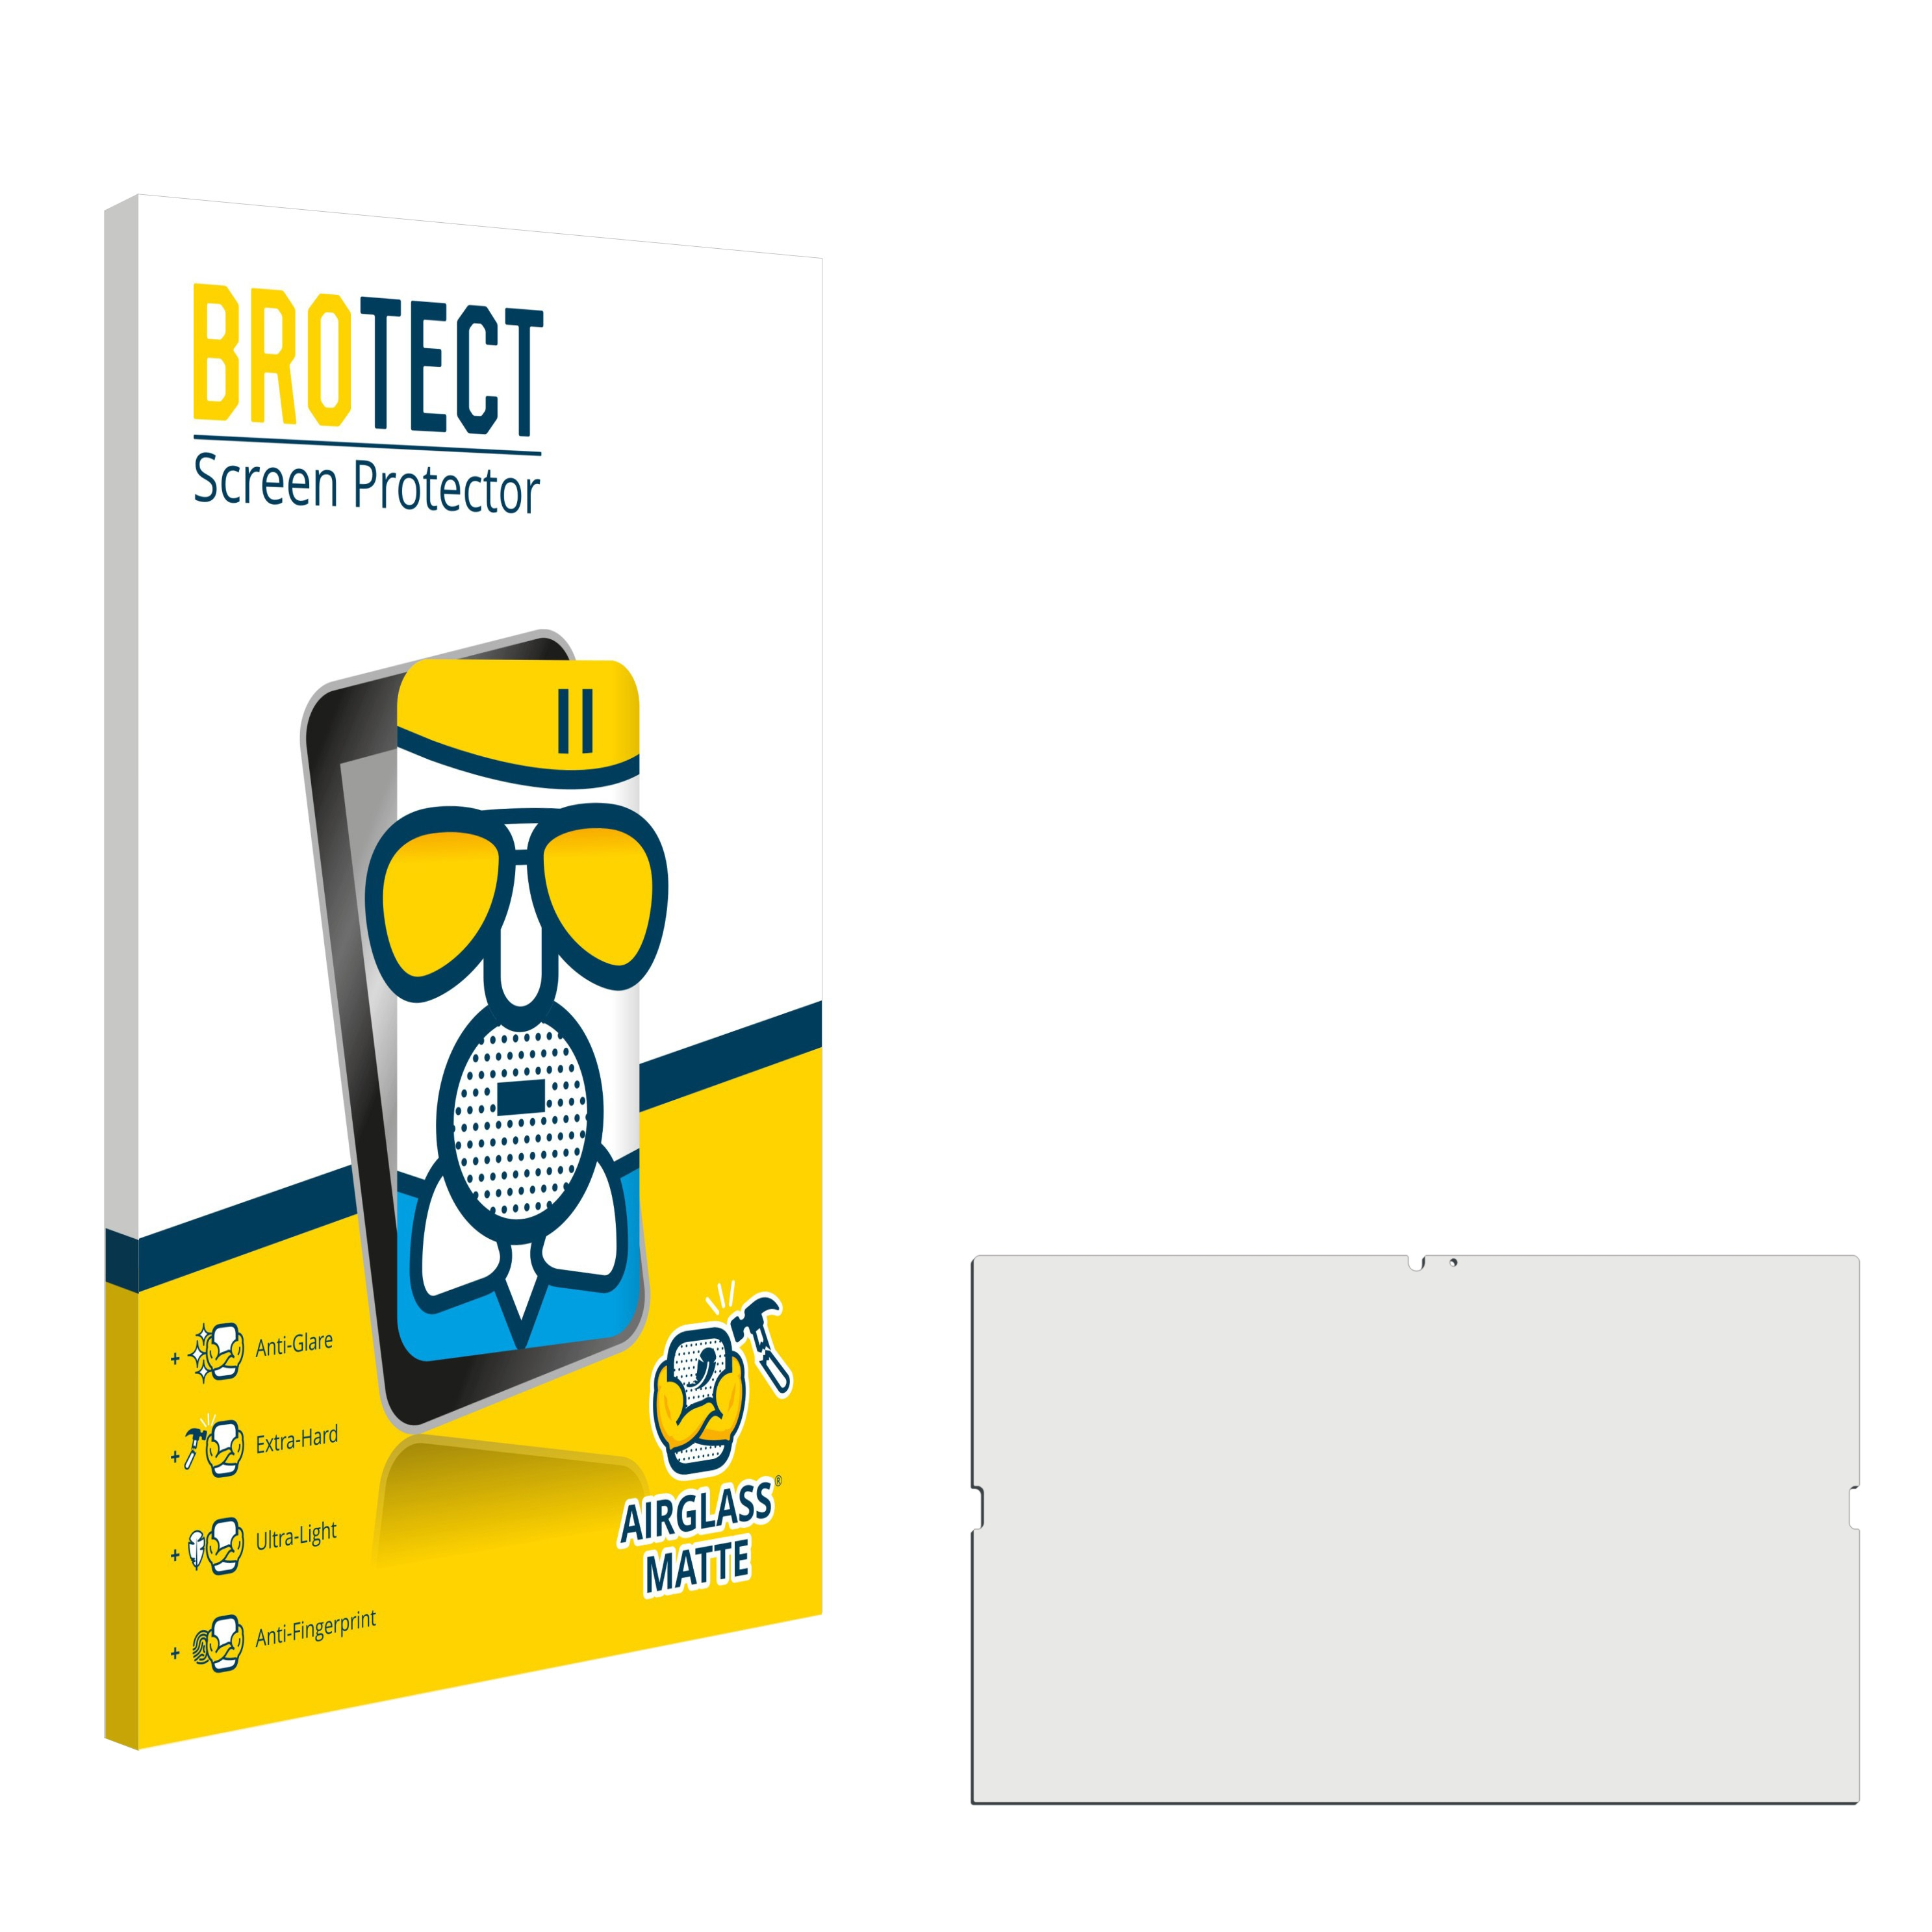 matte T902) Lifebook Schutzfolie(für Airglass Fujitsu BROTECT